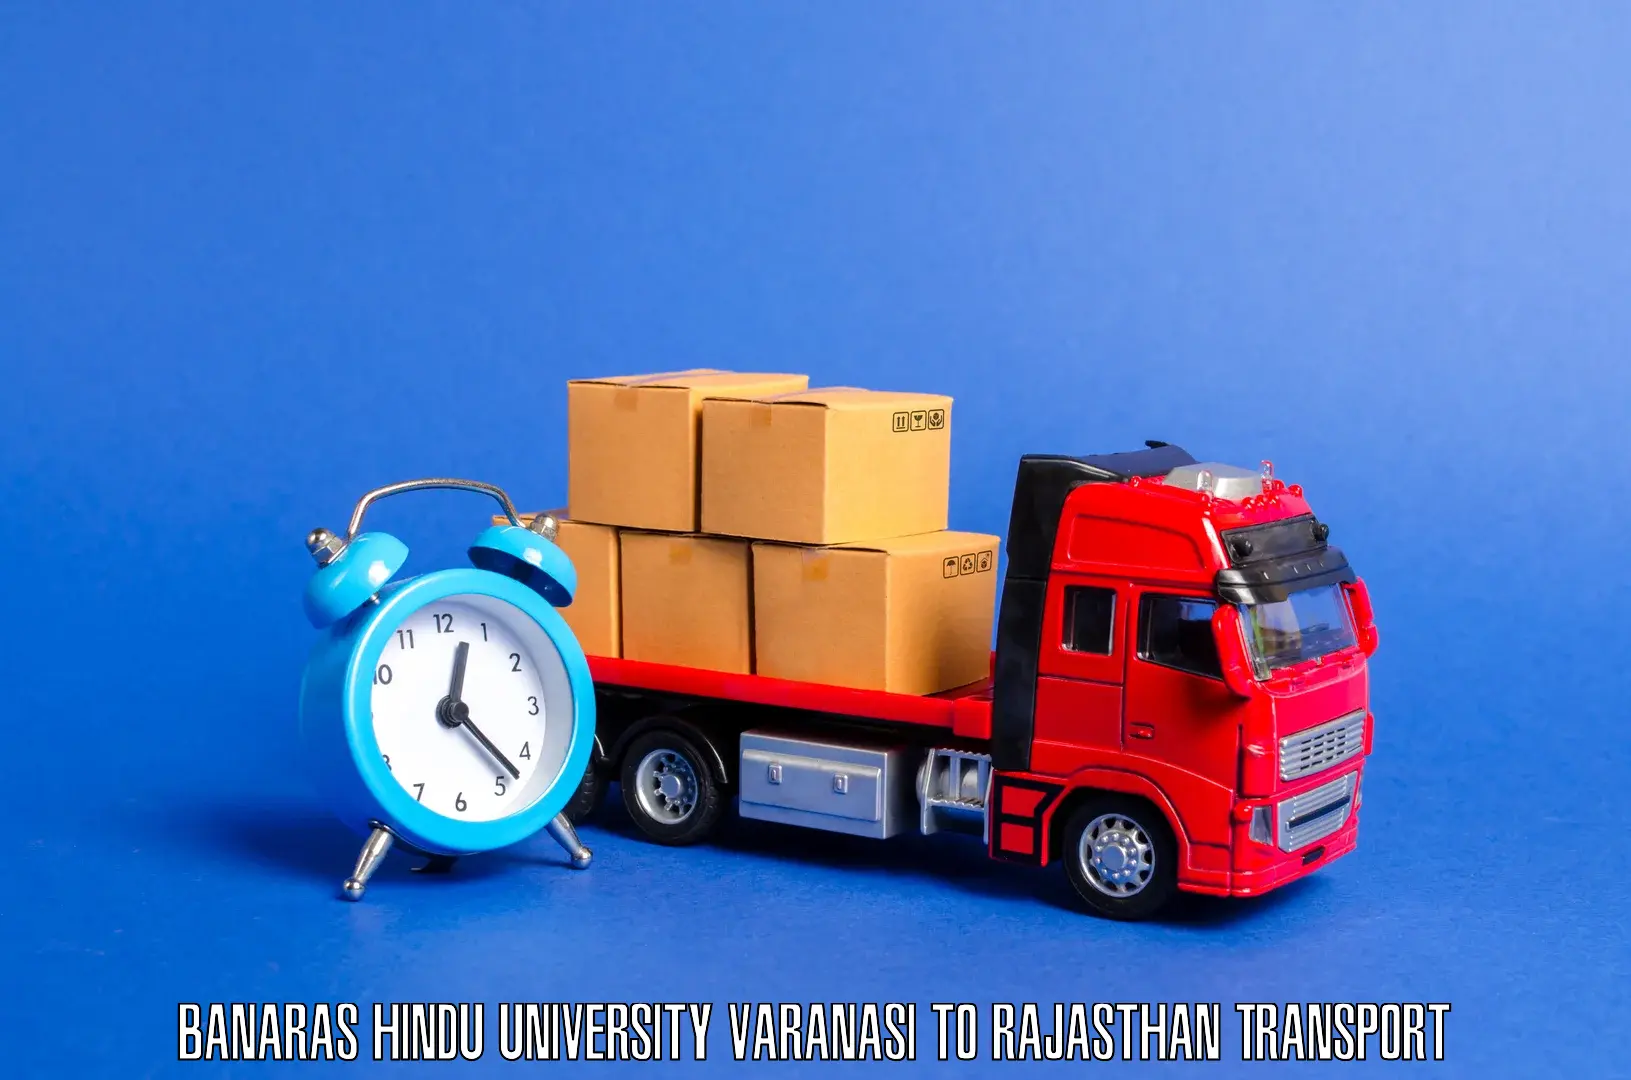 Daily transport service Banaras Hindu University Varanasi to Khairthal